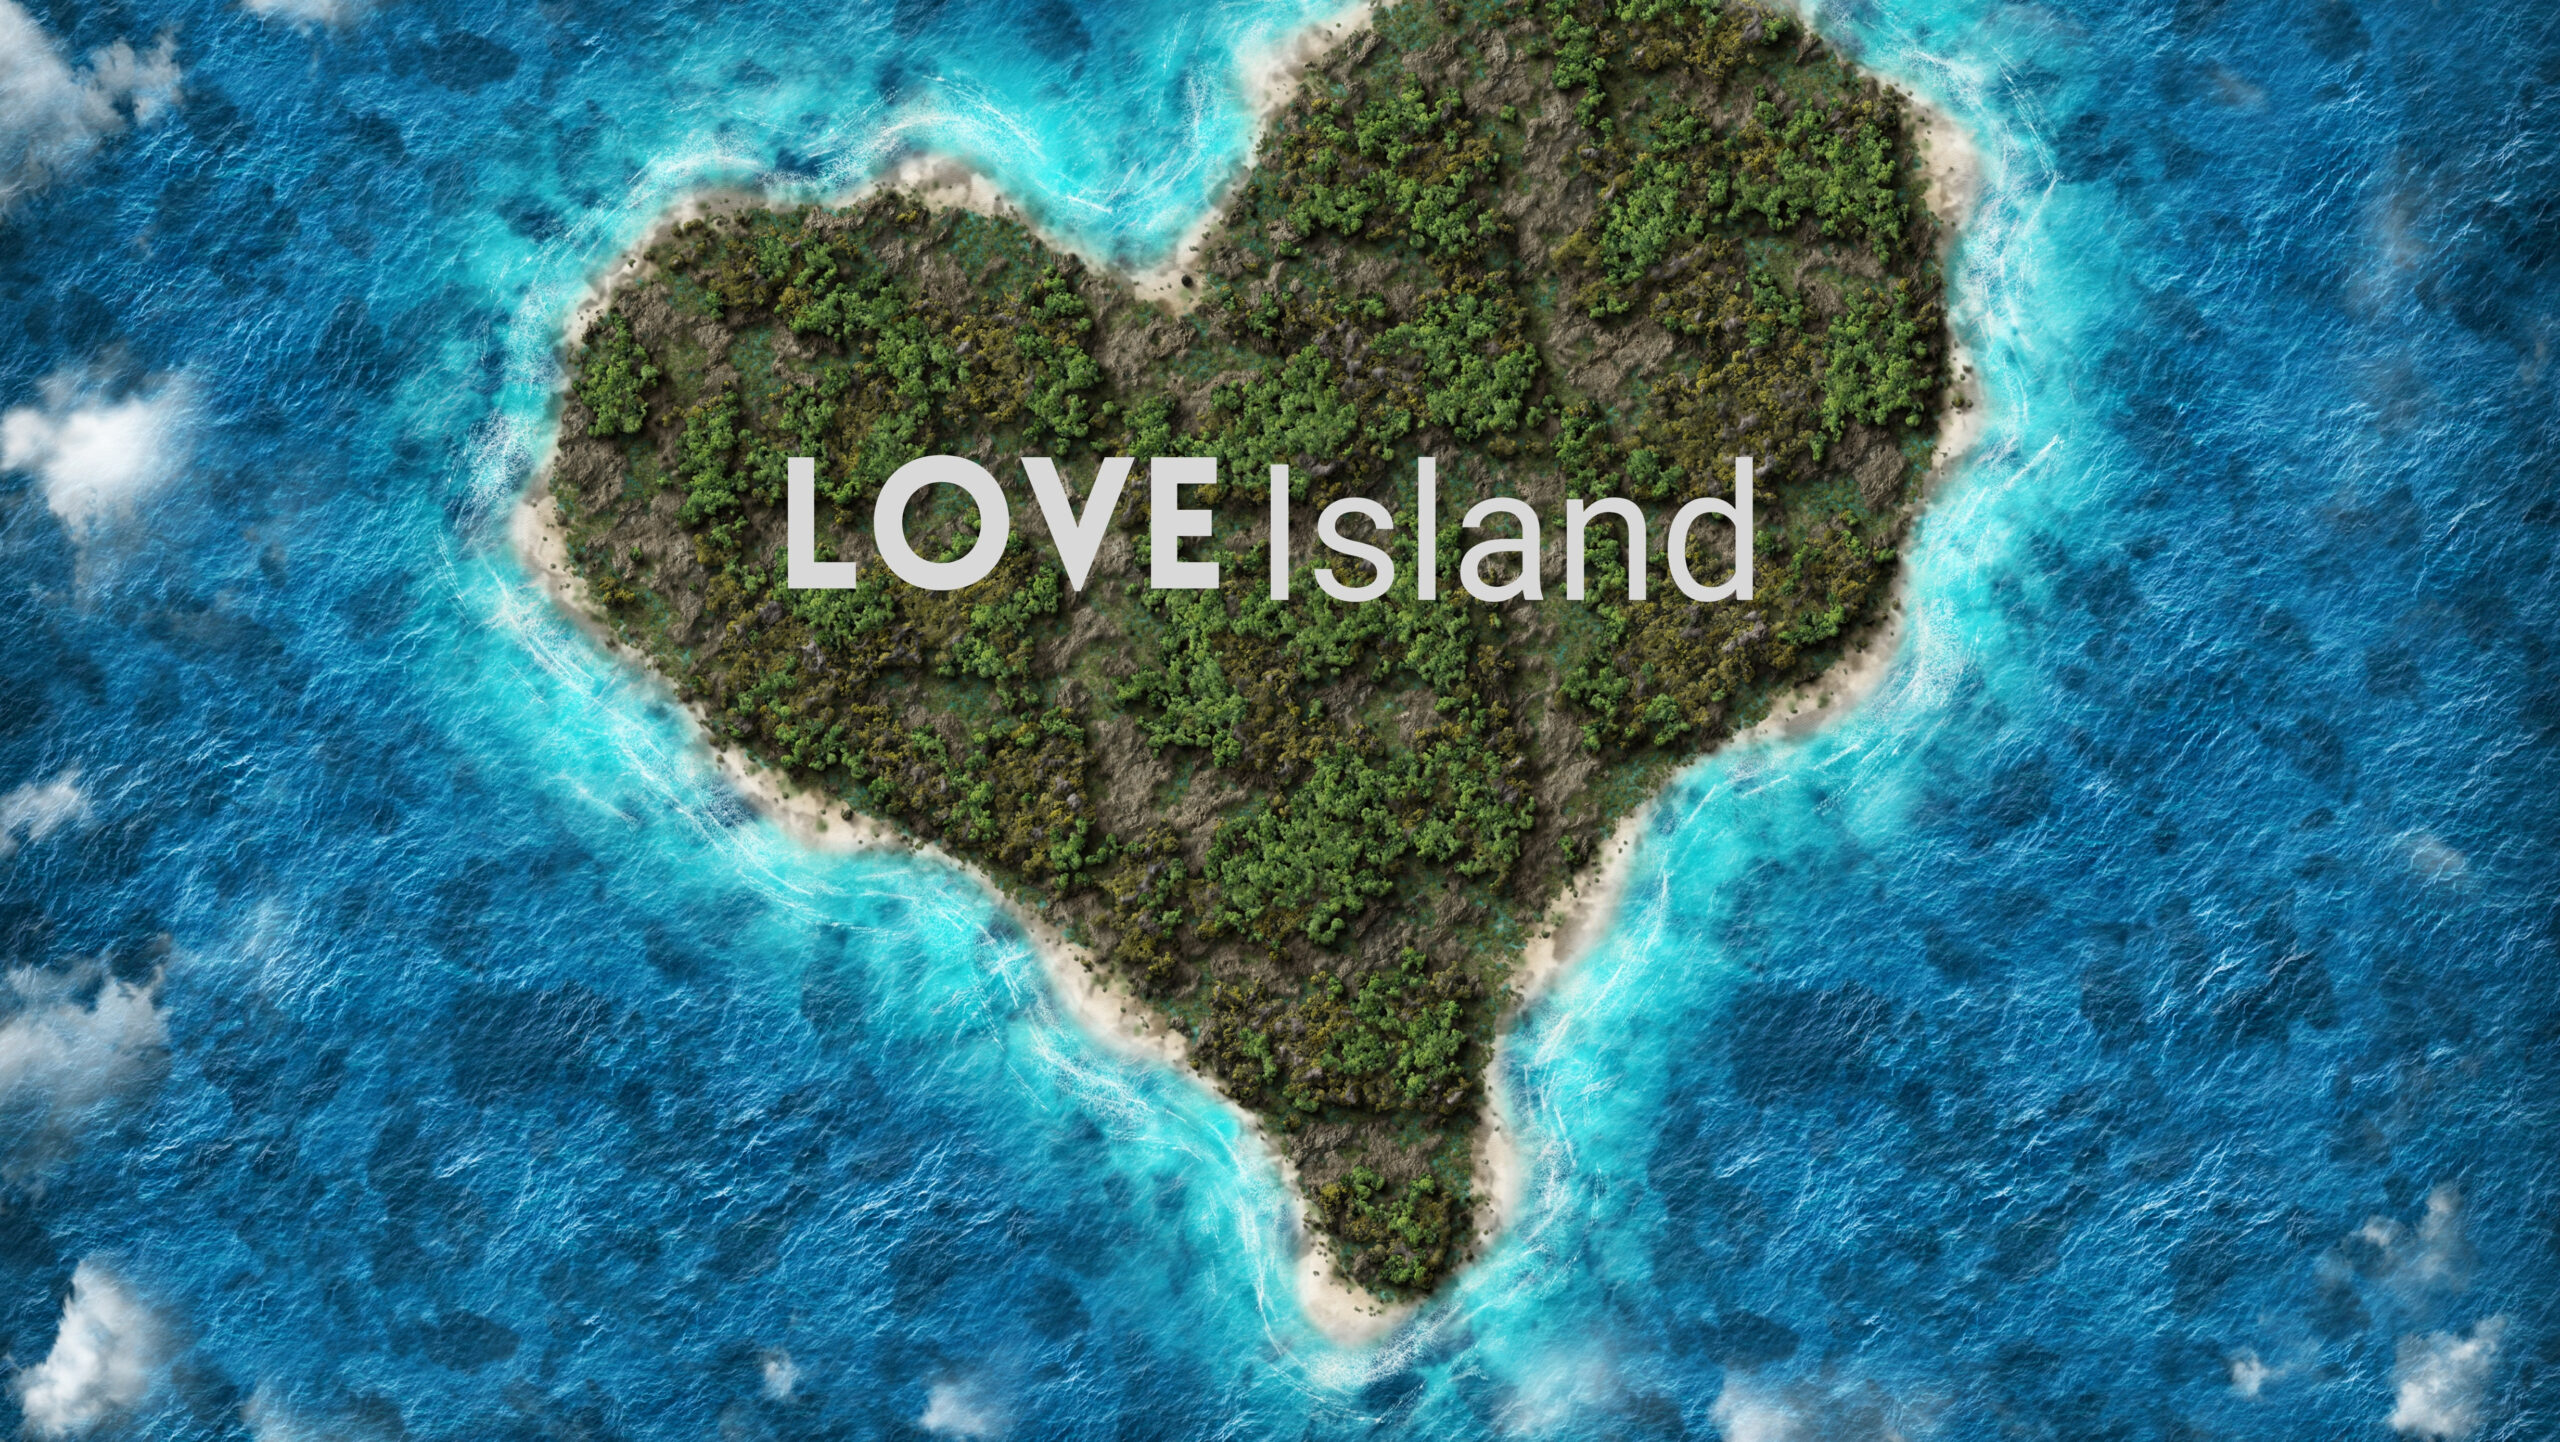 Love Island – What A Great Idea!